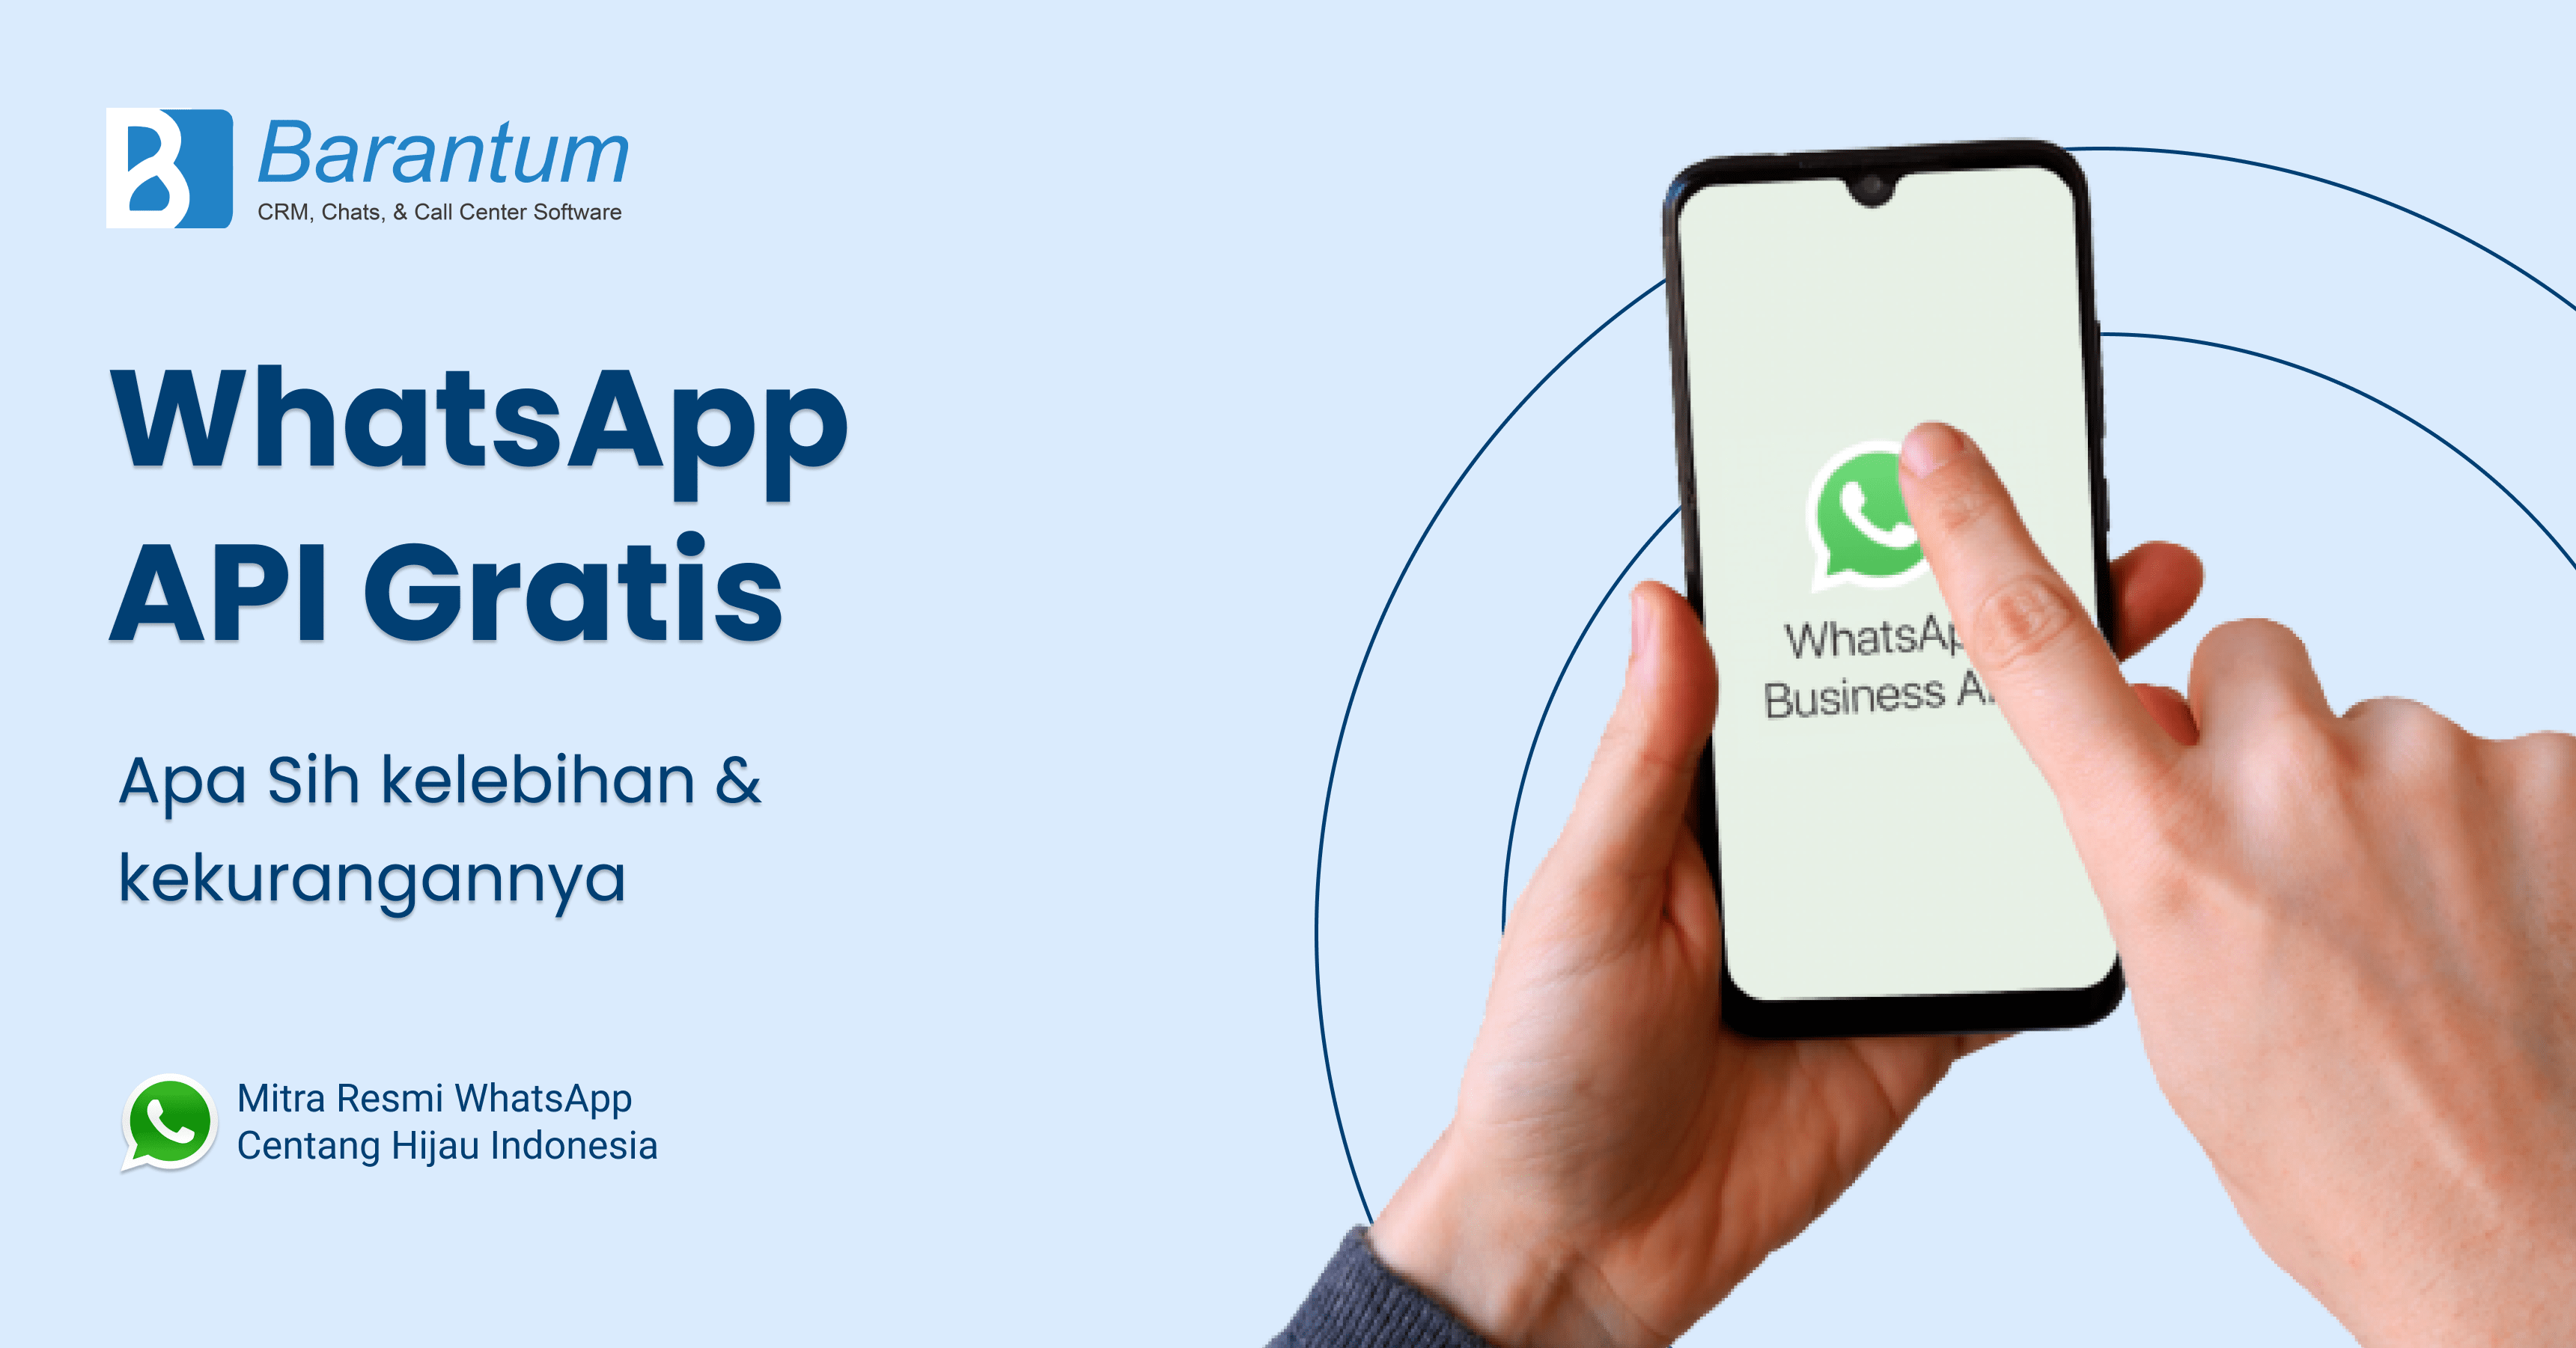 WhatsApp API Gratis